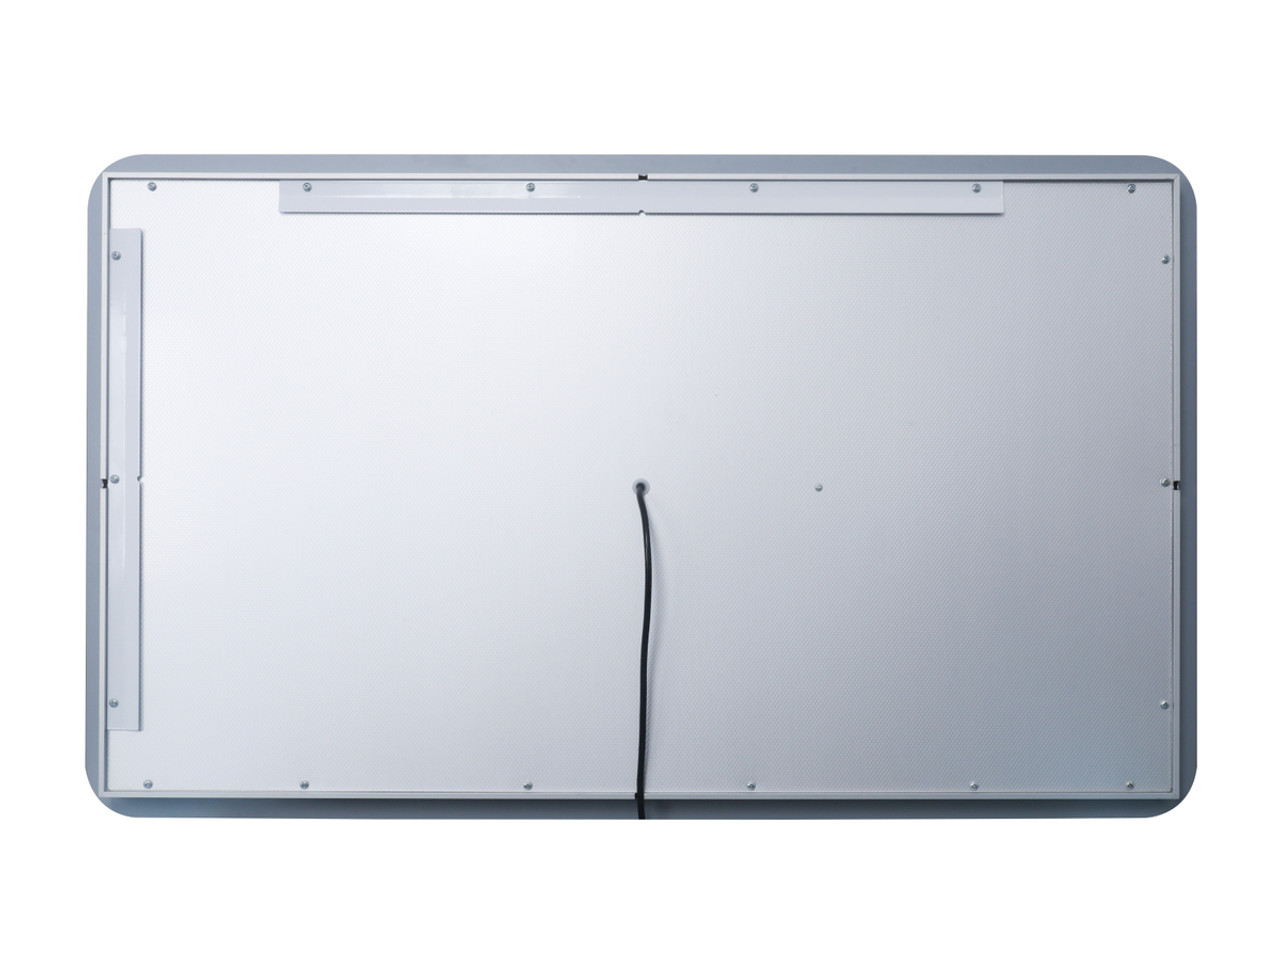 Elegant Decor MRE32040 Genesis 20in x 40in soft edge LED mirror